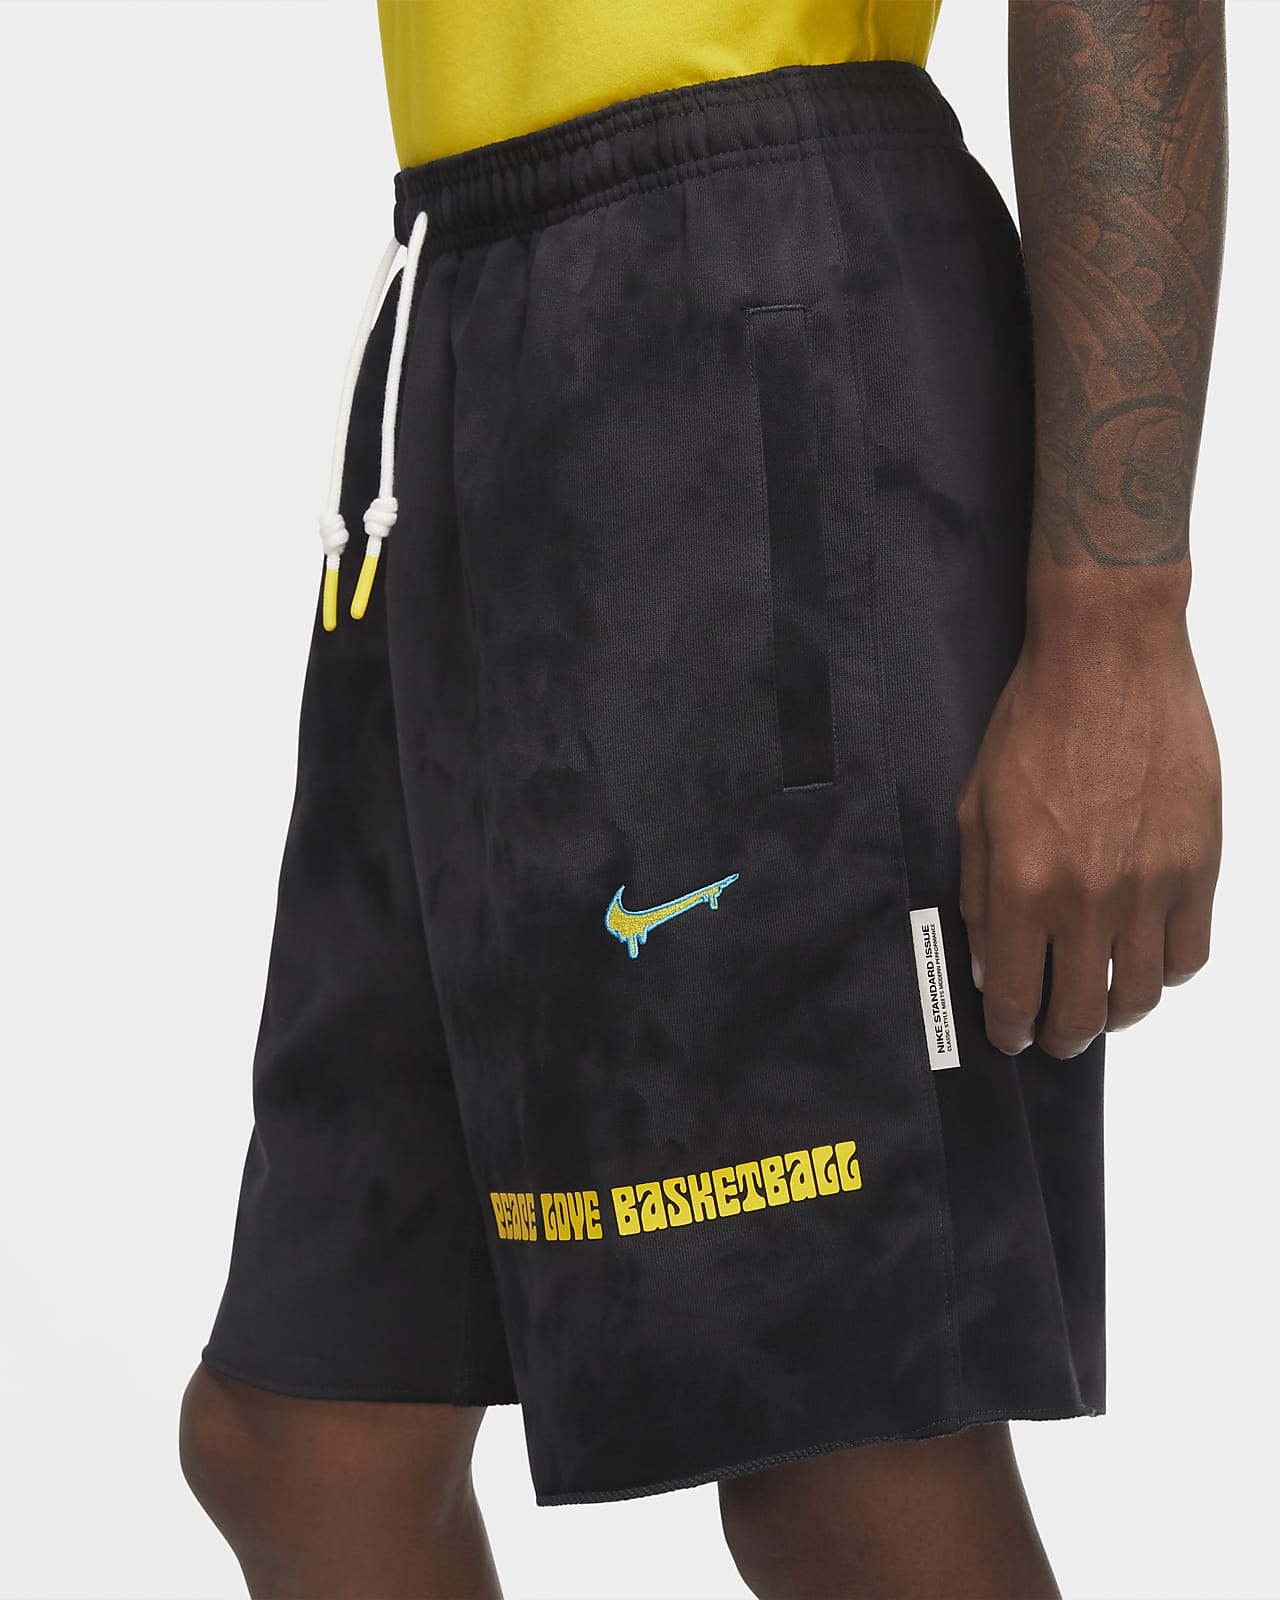 nike basketball shorts with pockets